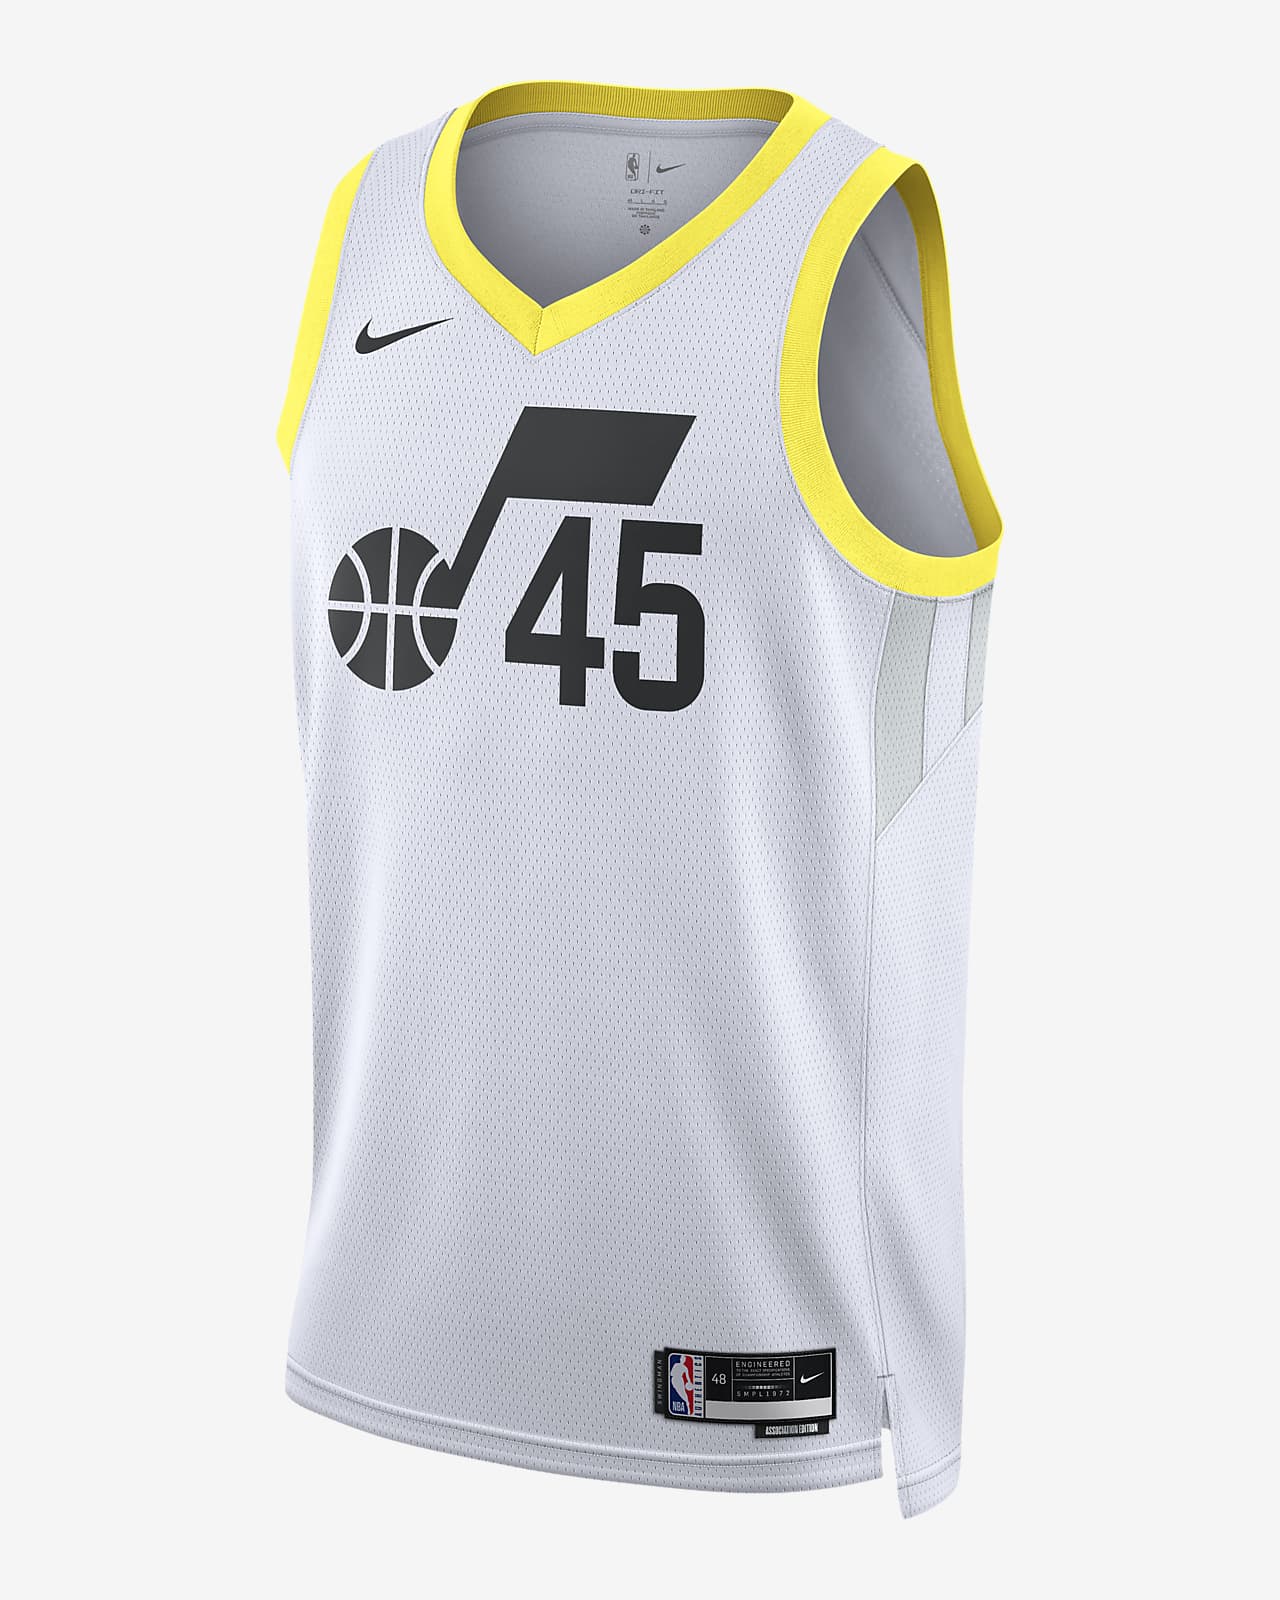 Utah Jazz Association Edition 2022/23 Nike Dri-FIT NBA Swingman Jersey